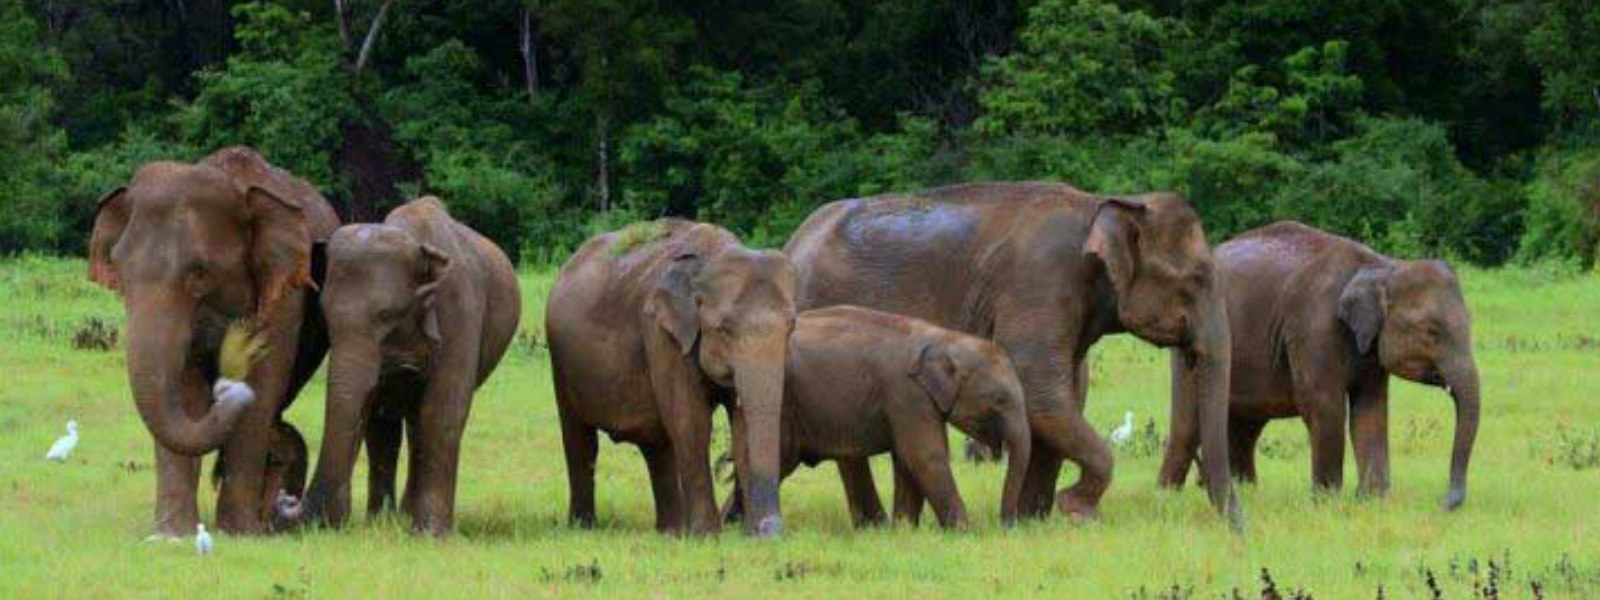 Wild elephants threaten the livelihoods of farmers